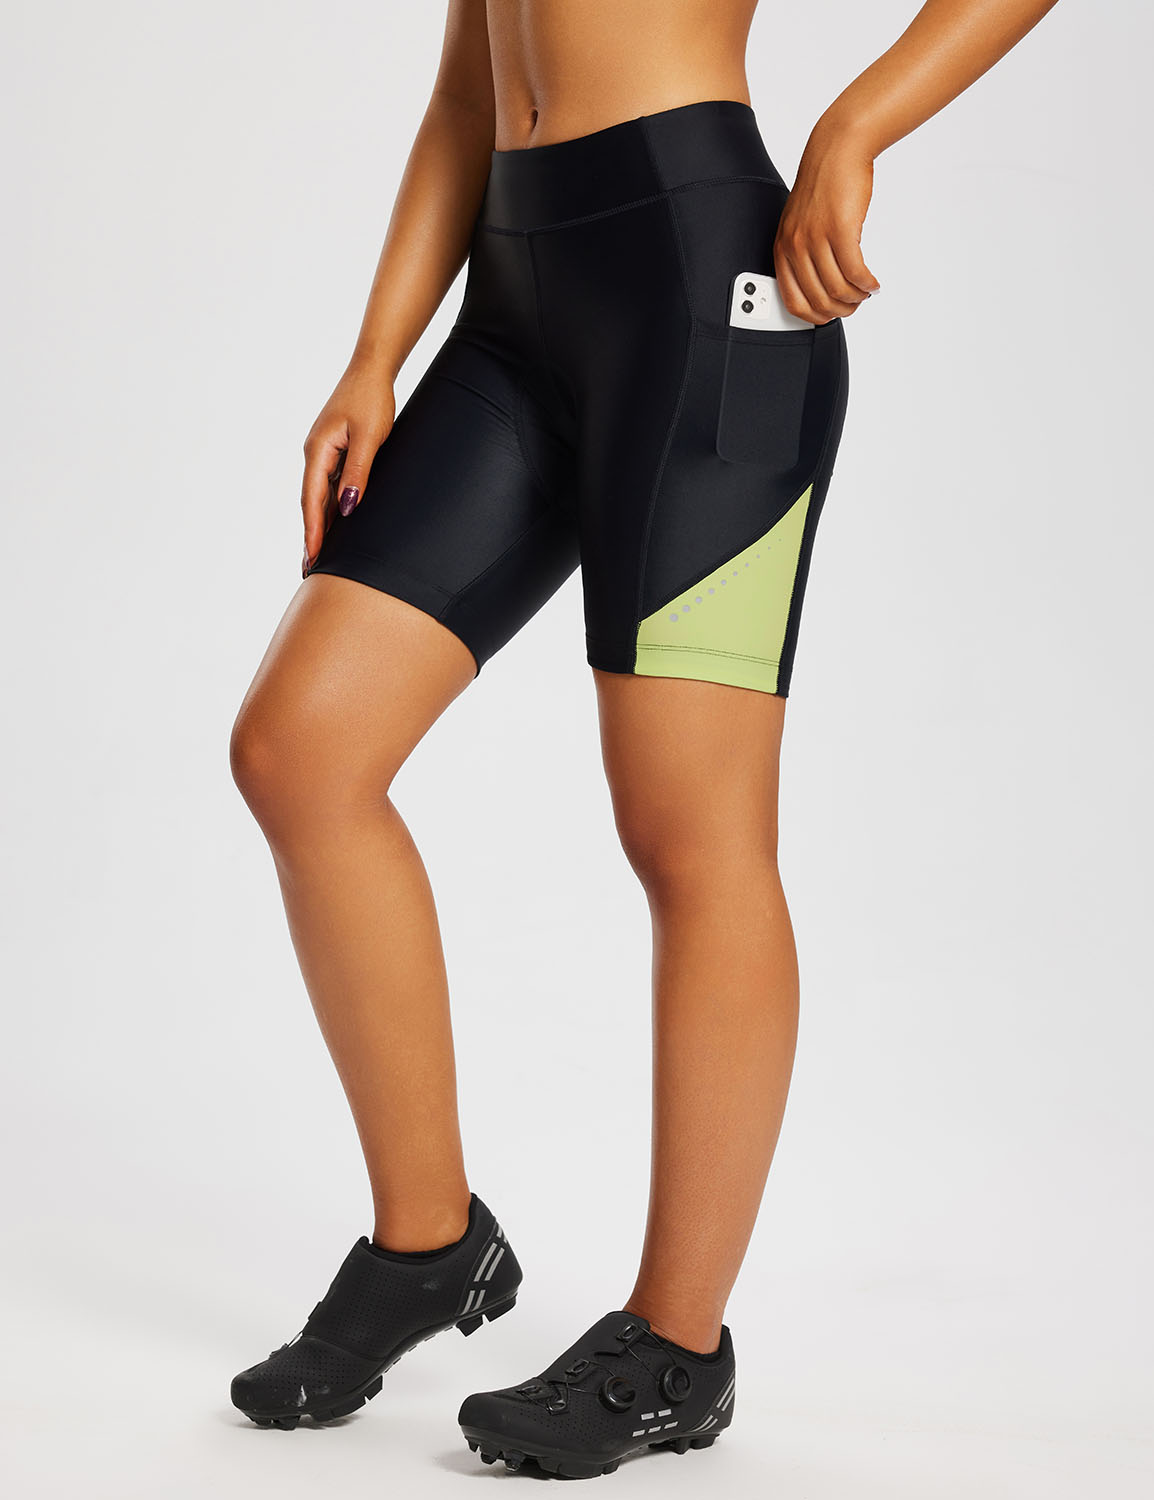  BALEAF Women's 4D Padded Bike Pants Cycling Knee Length Capris  Biking Shorts Bicycle Tights Pockets Gear UPF50+ Black/Green XL : Clothing,  Shoes & Jewelry